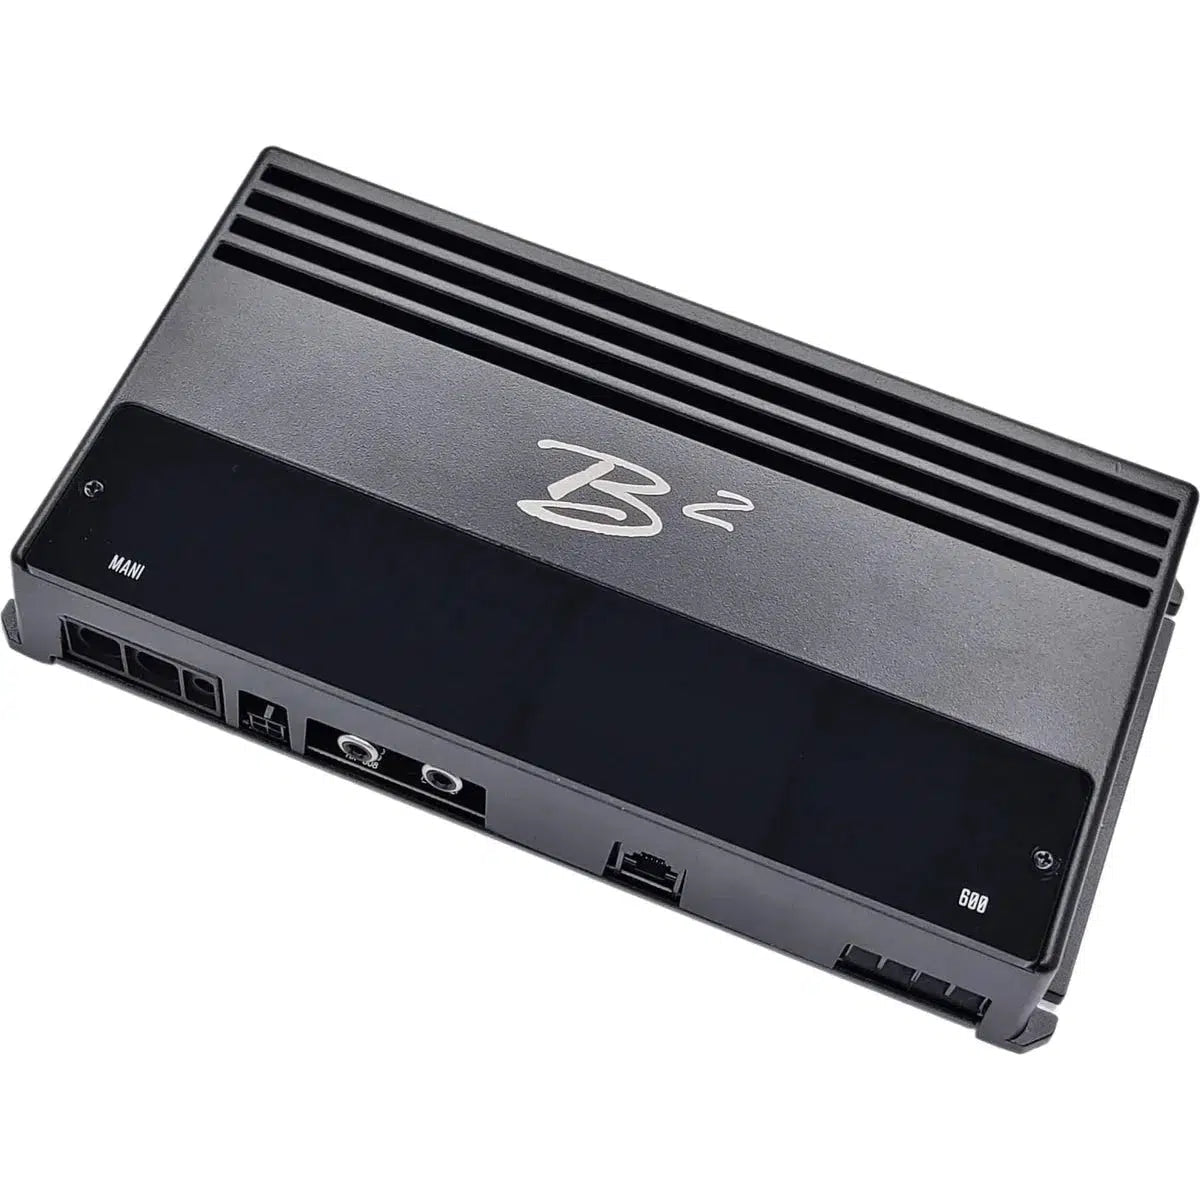 B2 Audio-Mani 600.1-1-channel amplifier-Masori.de